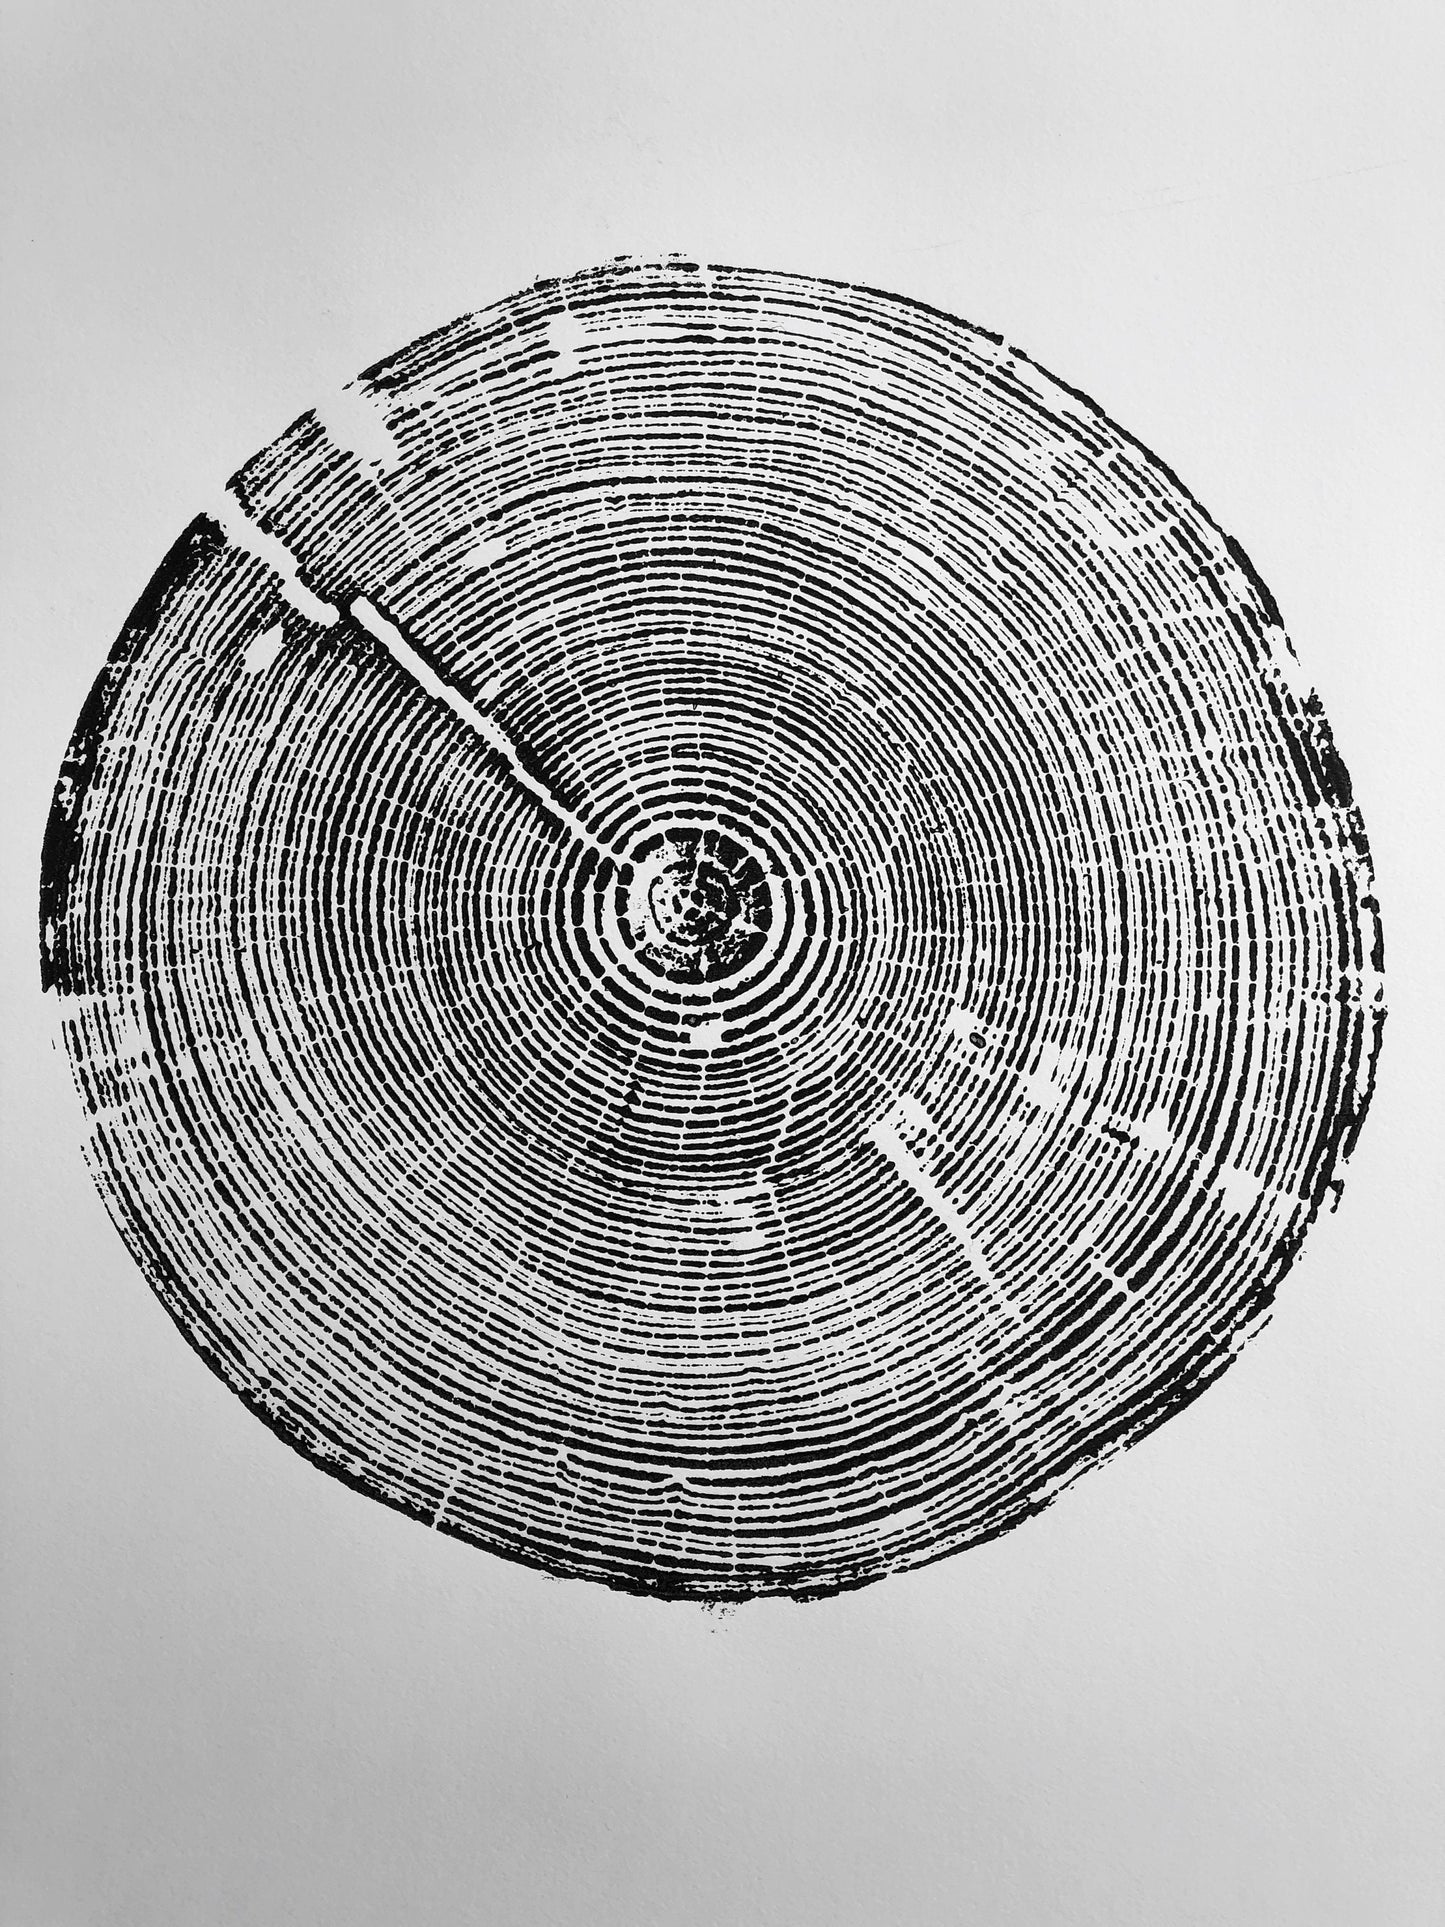 Alabama Long Leaf Pine - 18x24 print